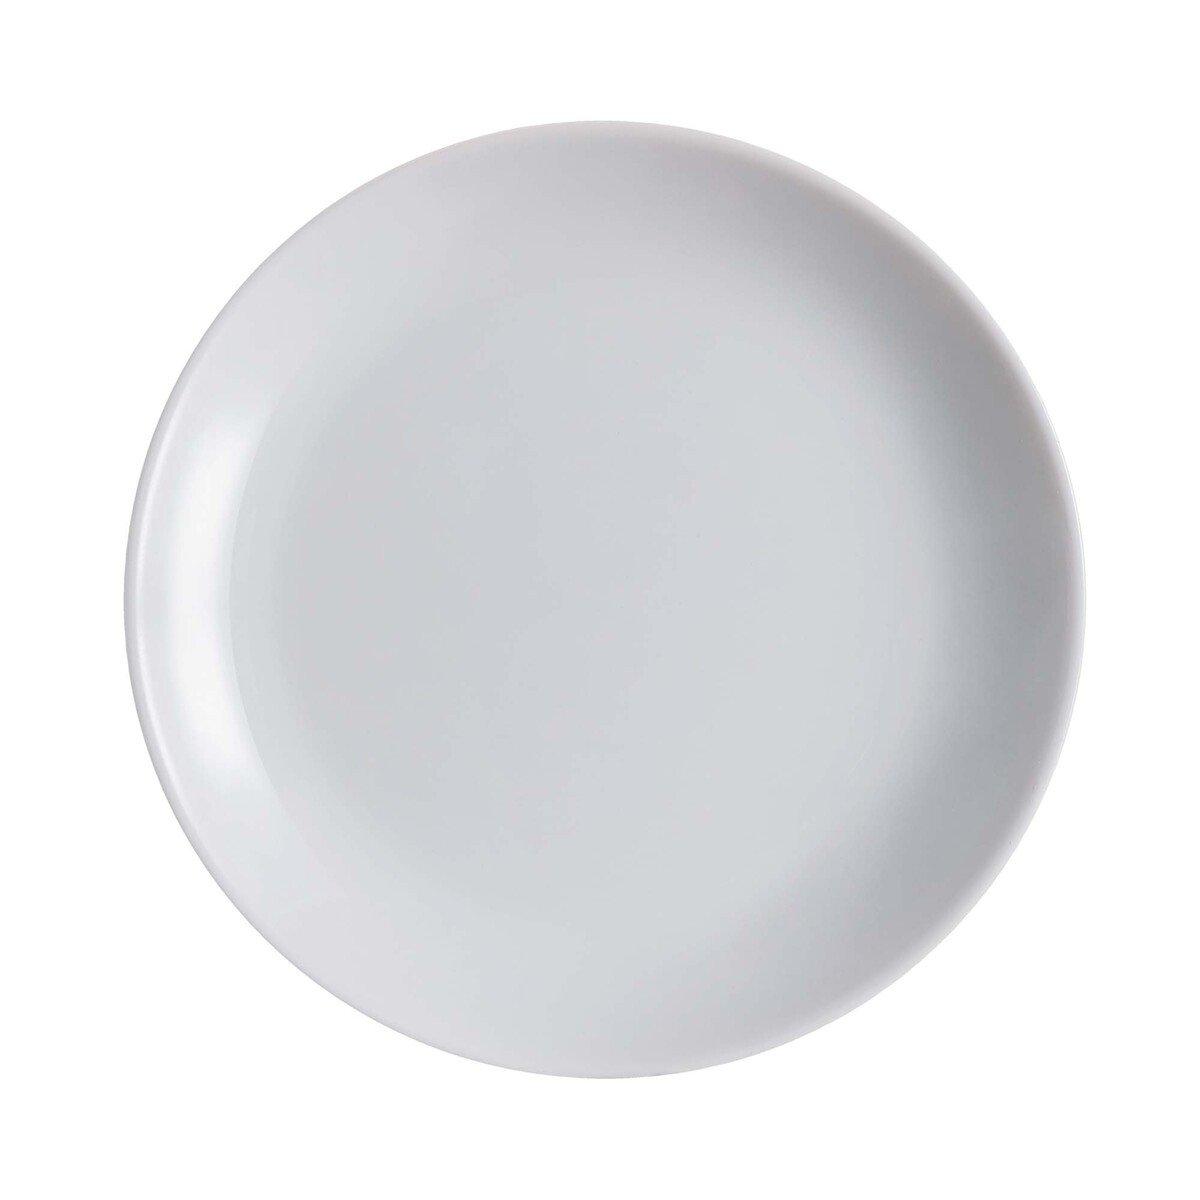 Luminarc Dinner Plate Diwali Granit P0705 27cm